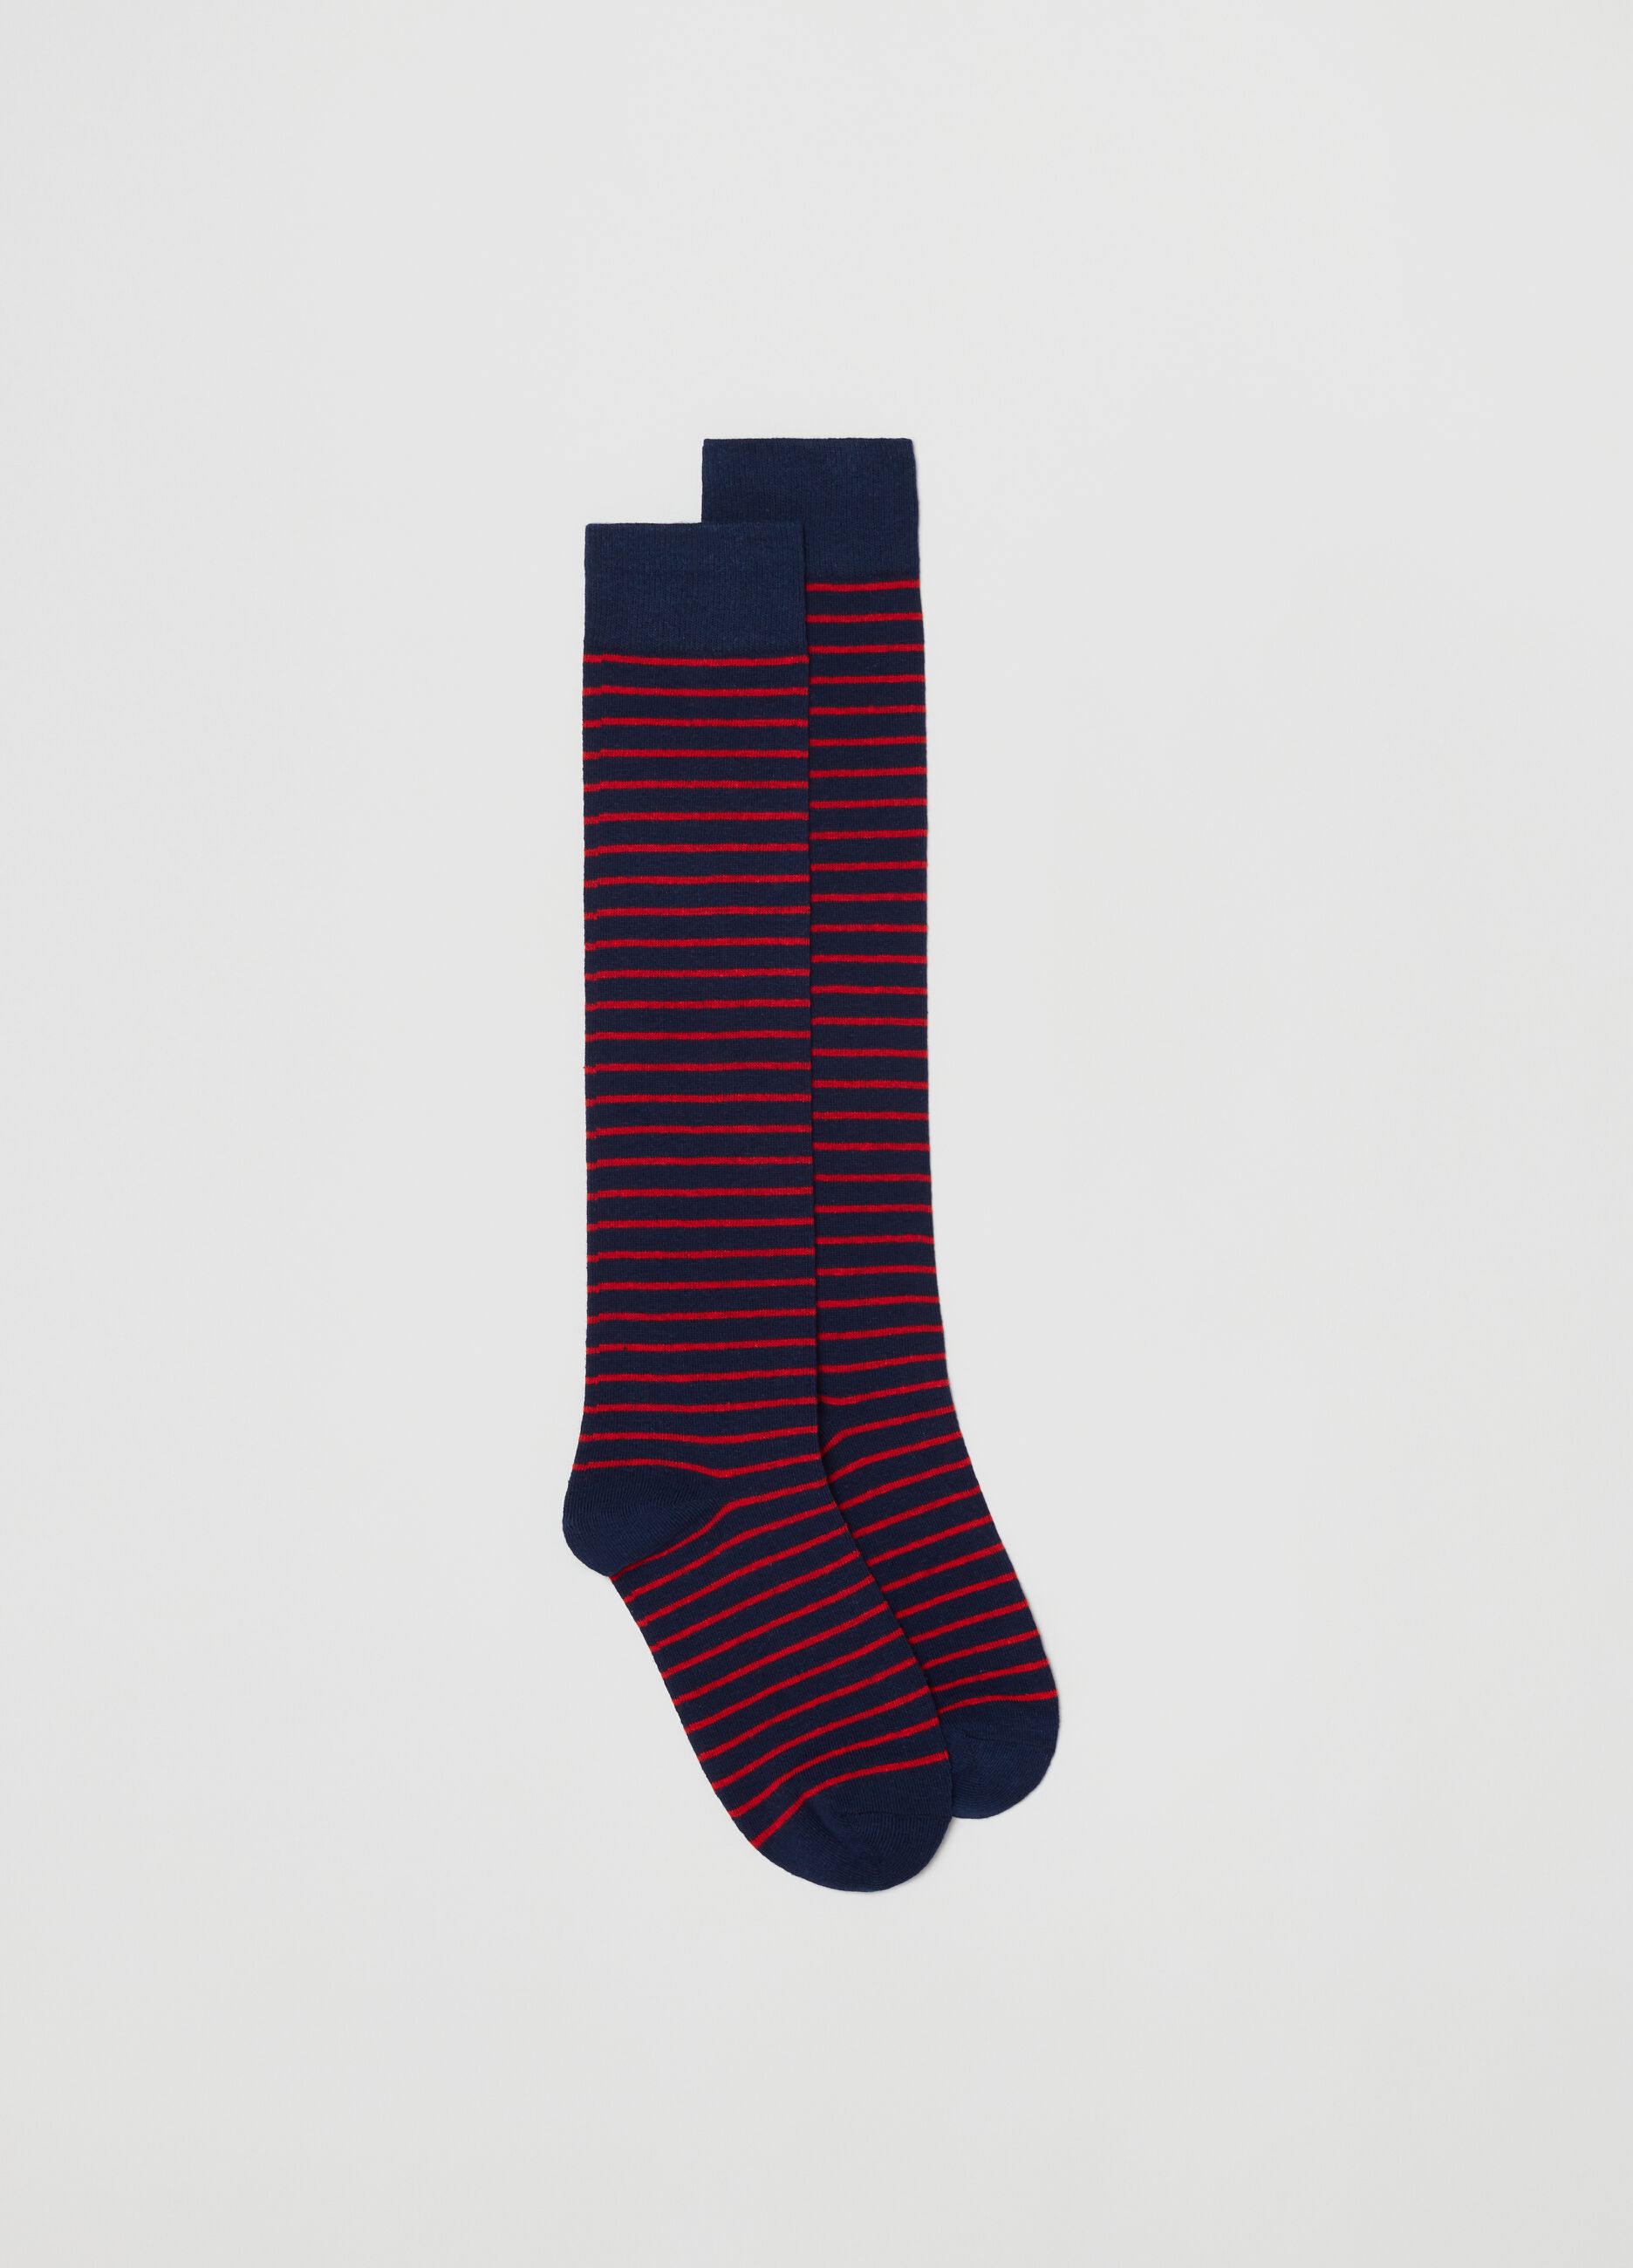 Long socks with polka dots and stripes